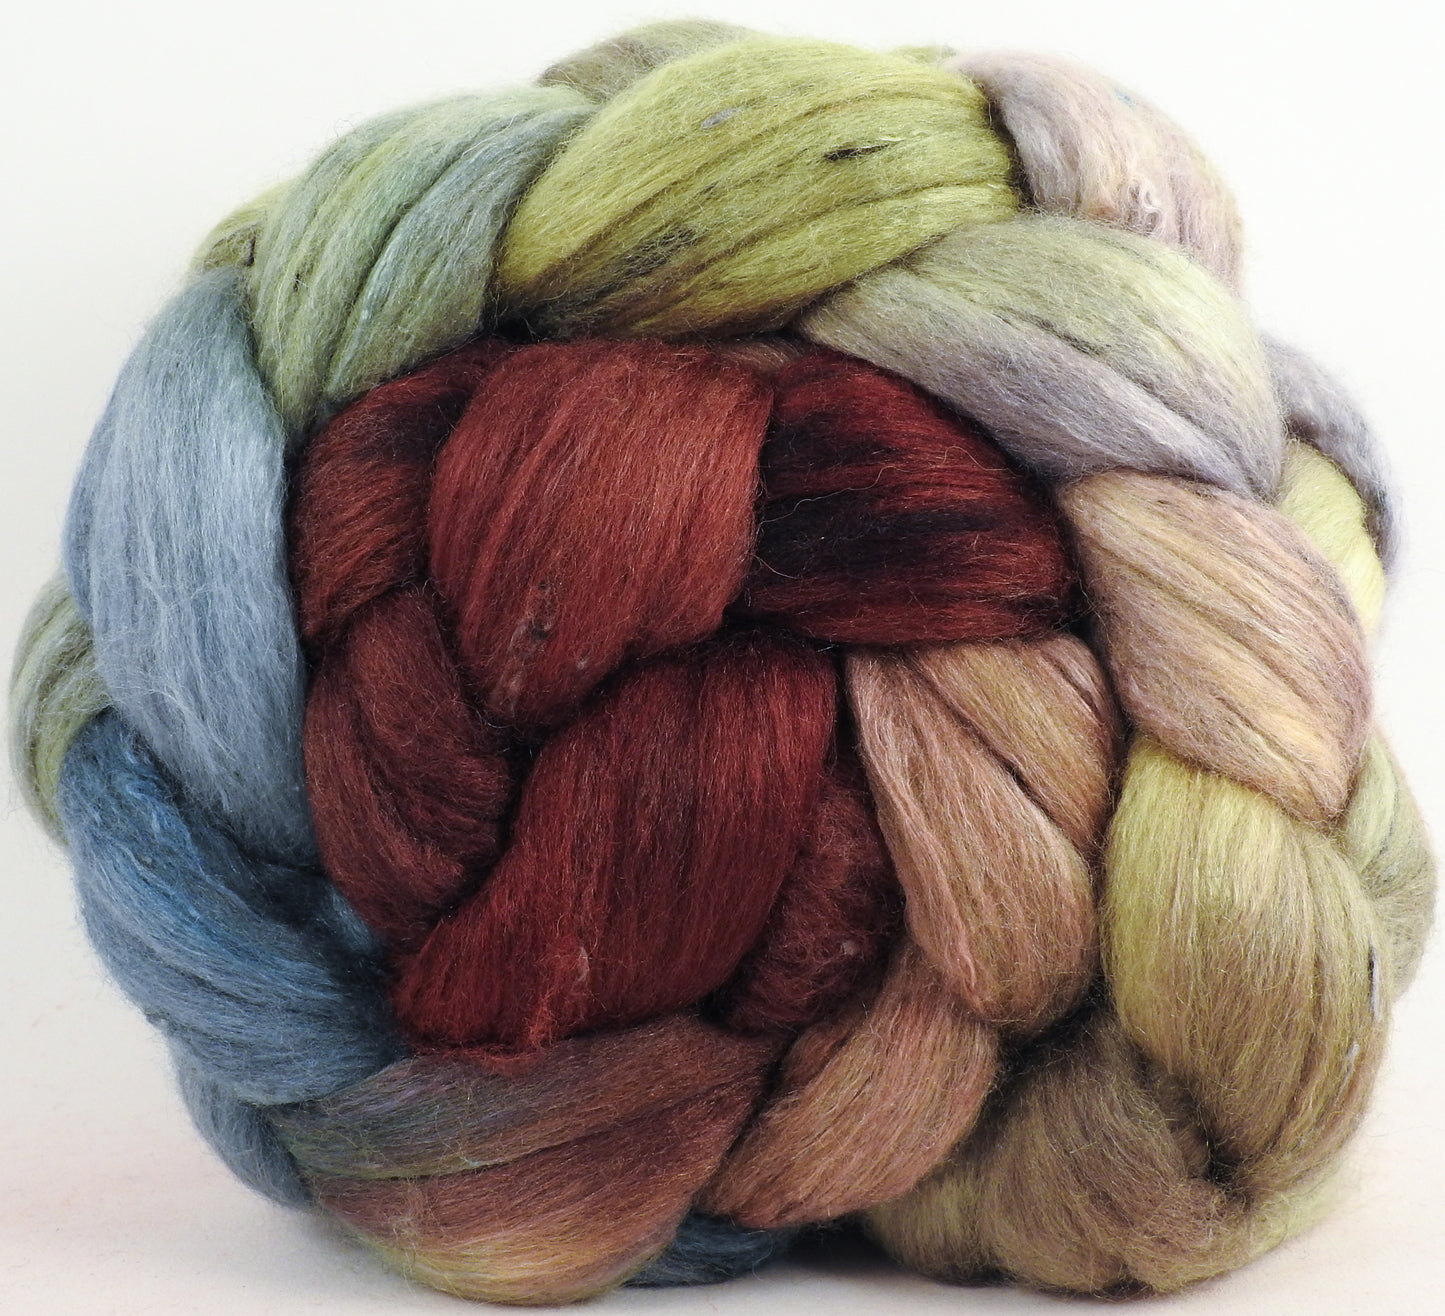 Batt in a Braid #49 - Winter Beech (5.5 oz) - Polwarth/ Mulberry Silk/ Tweed Blend (50/25/25)